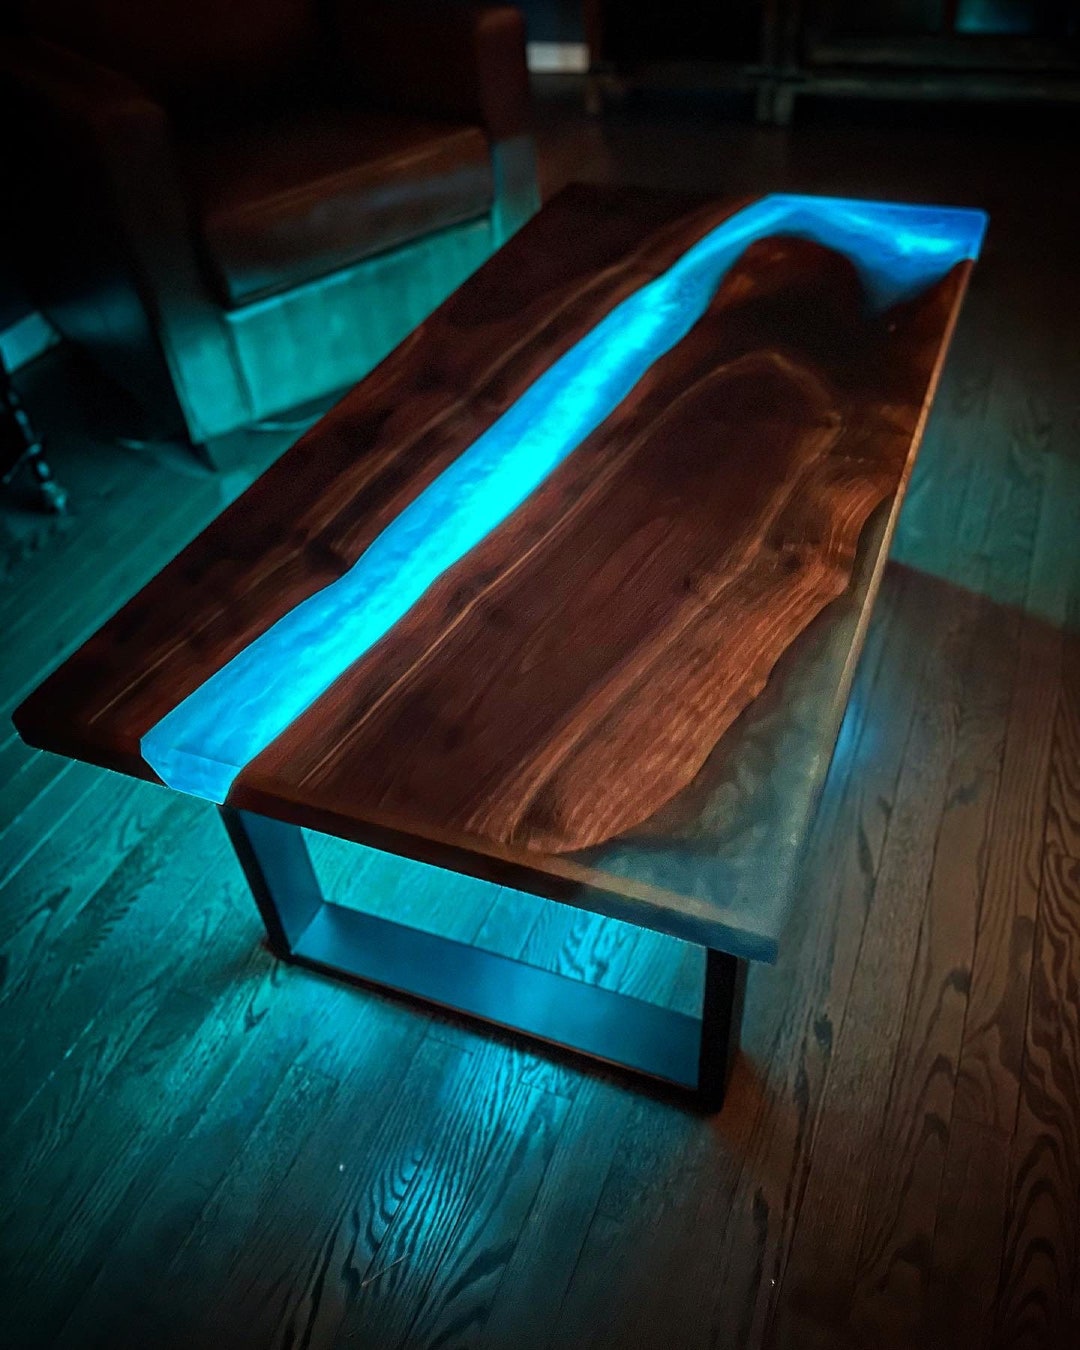 Epoxy and Wood Table Top - Metallic Multicolor